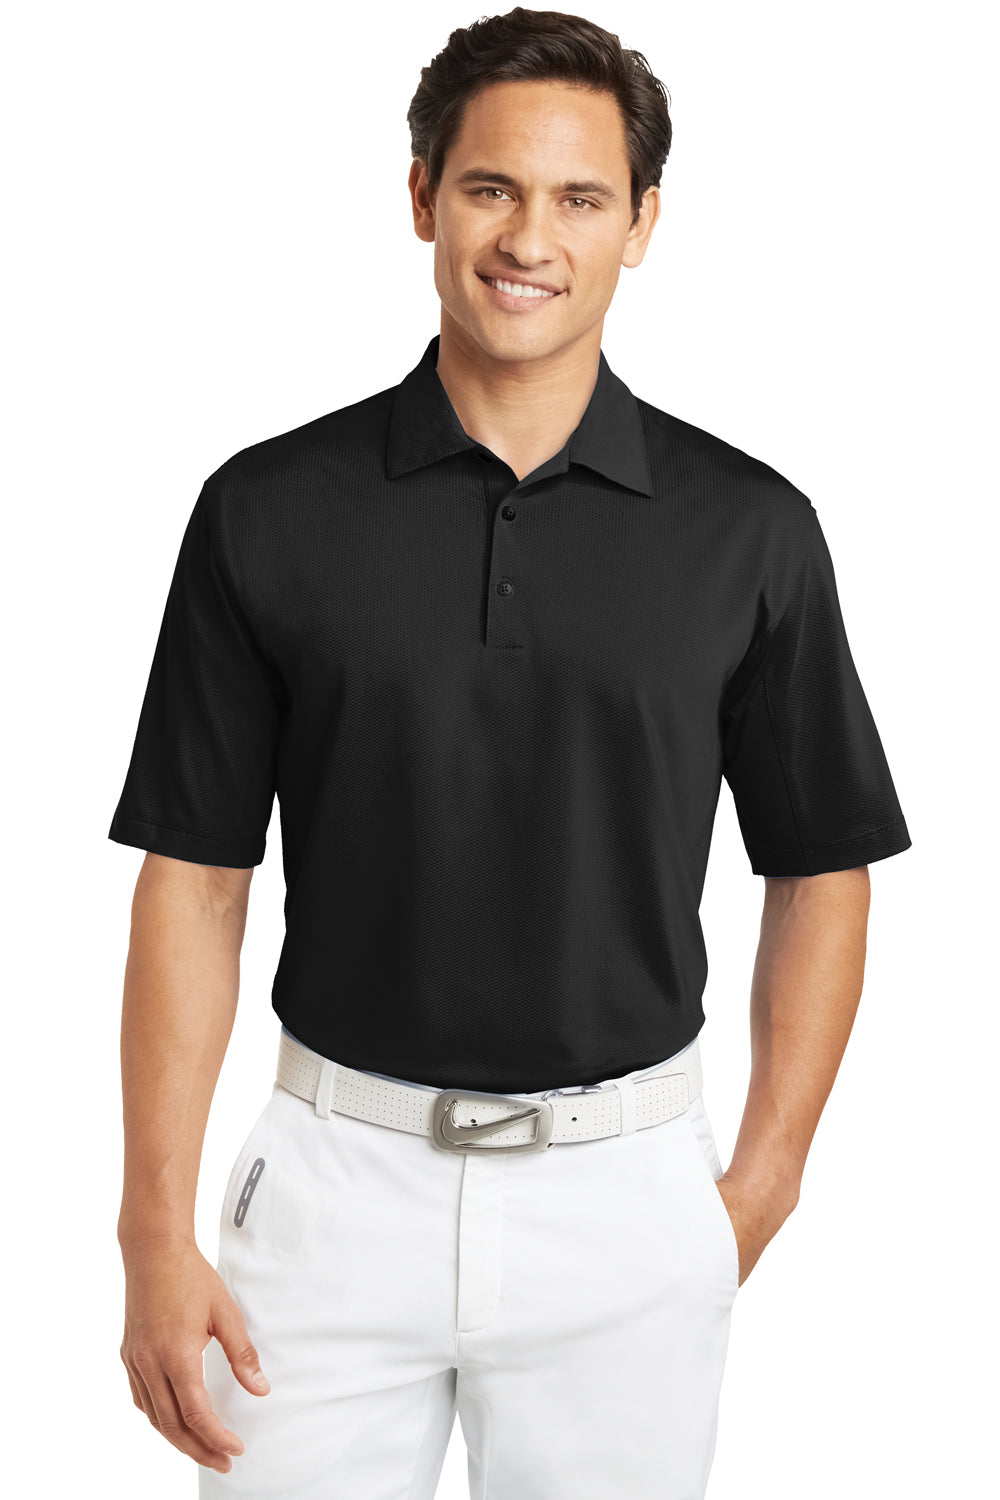 Nike 354055 Mens Sphere Dry Moisture Wicking Short Sleeve Polo Shirt Black Front